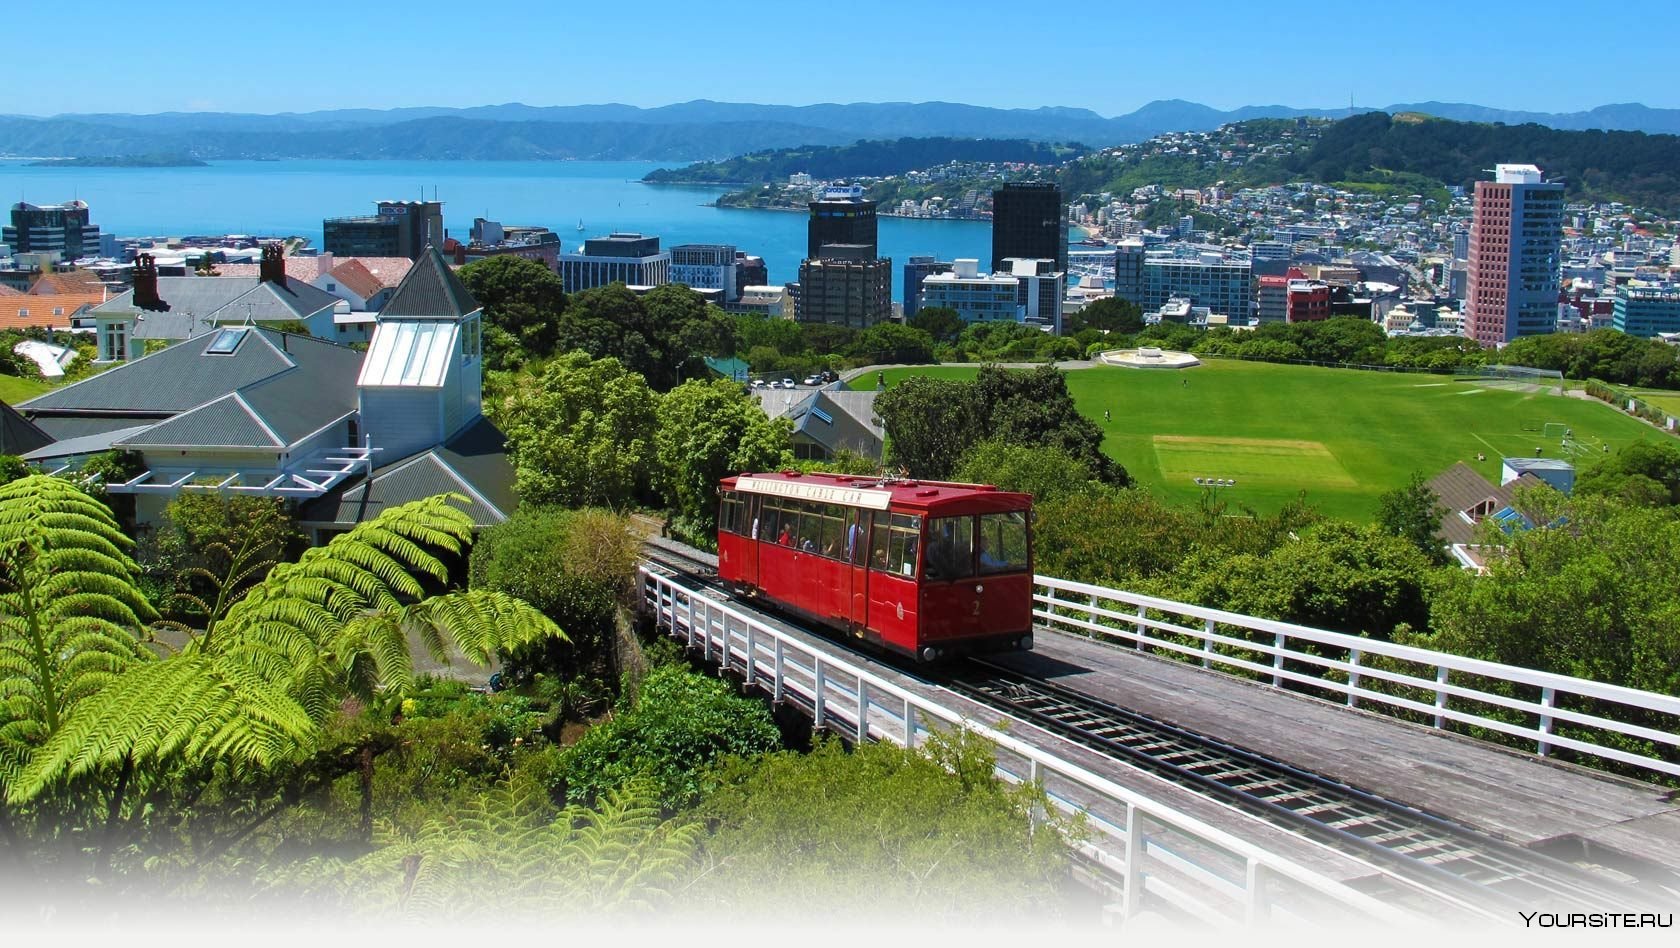 New zealand capital. Веллингтон (новая Зеландия). Новая Зеландия столица Веллингтон. Веллингтон новая Зеландия трамвай. Новая Зеландия Окленд пригород.